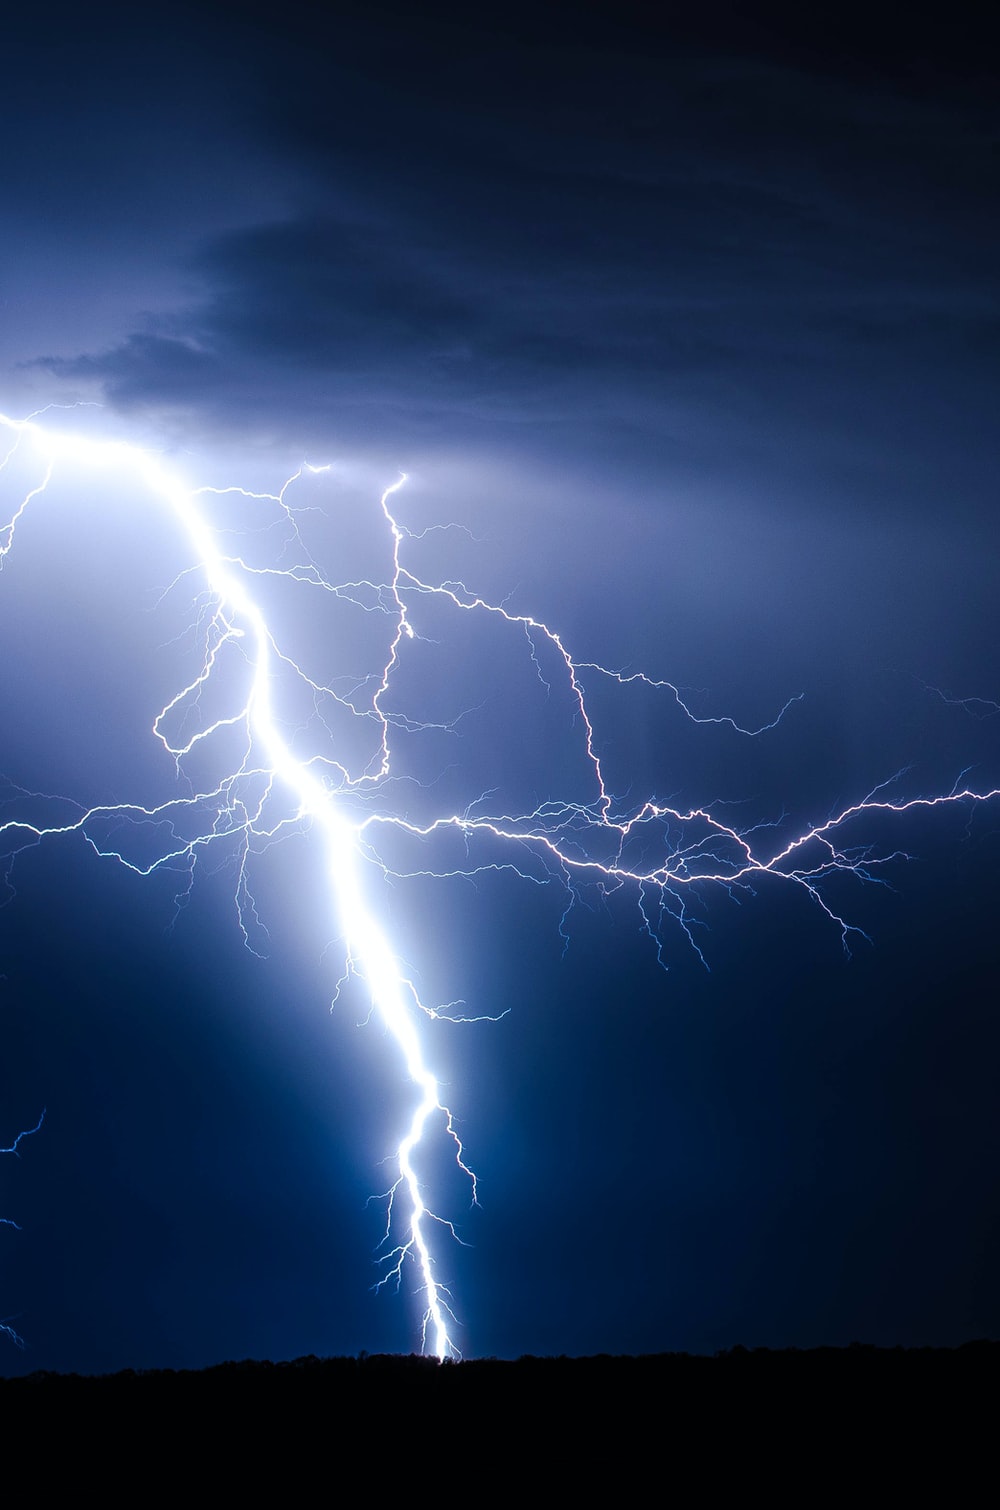 Lightning Bolt Picture. Download Free Image